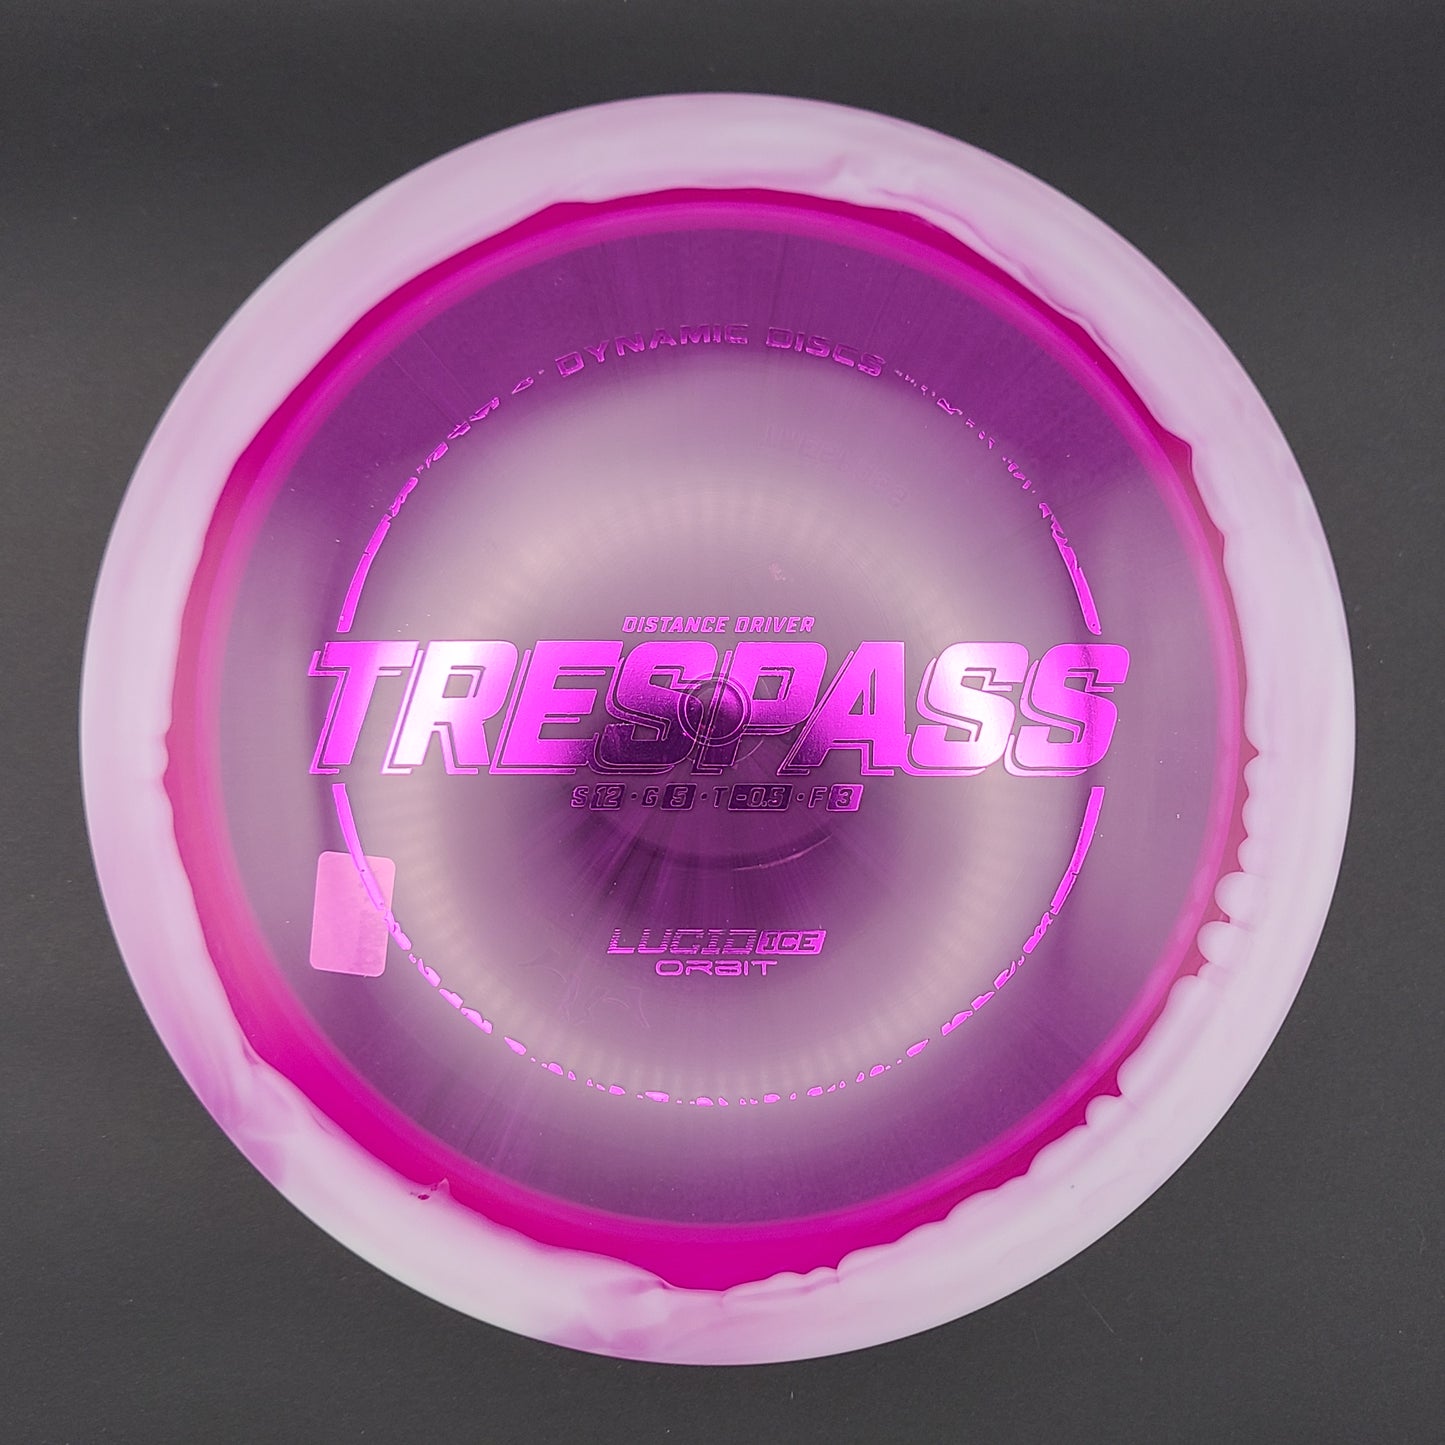 Dynamic Discs - Trespass - Lucid-Ice Orbit